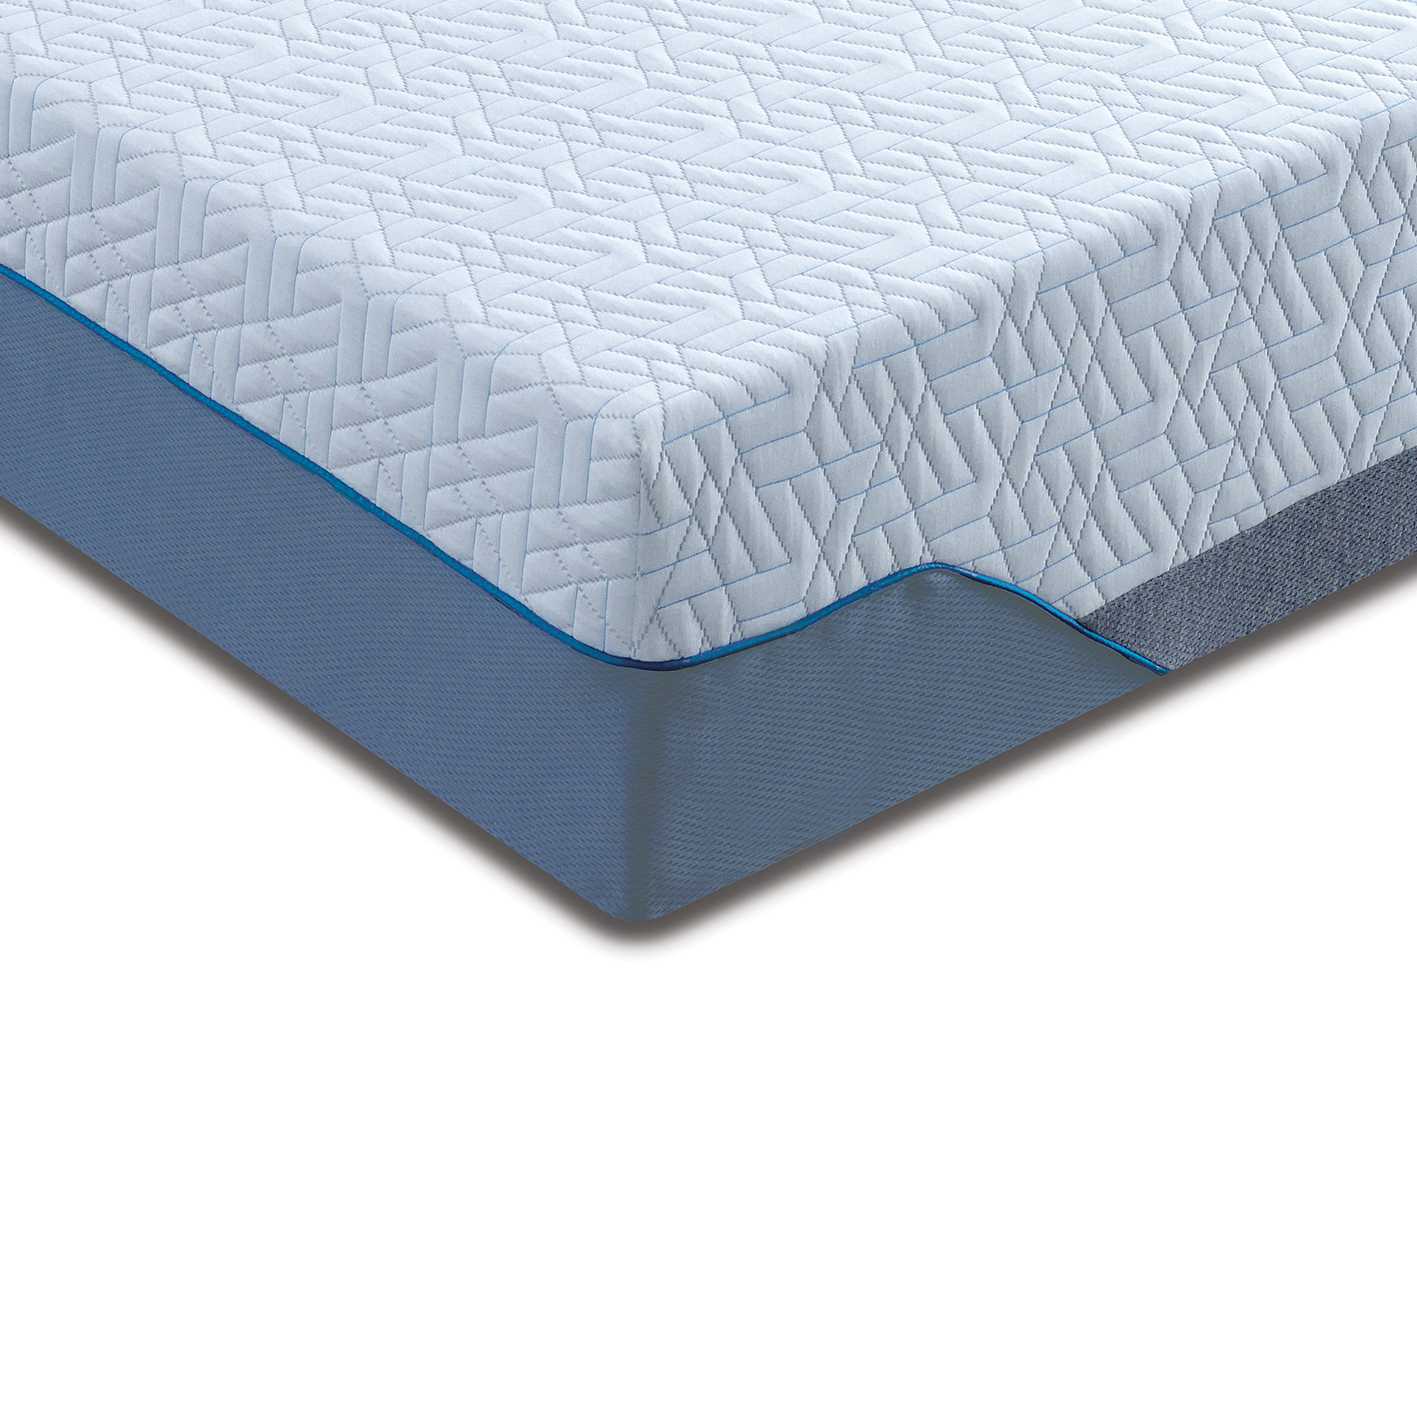 Blue Velvet double ottoman bed and mattress set - Laura James